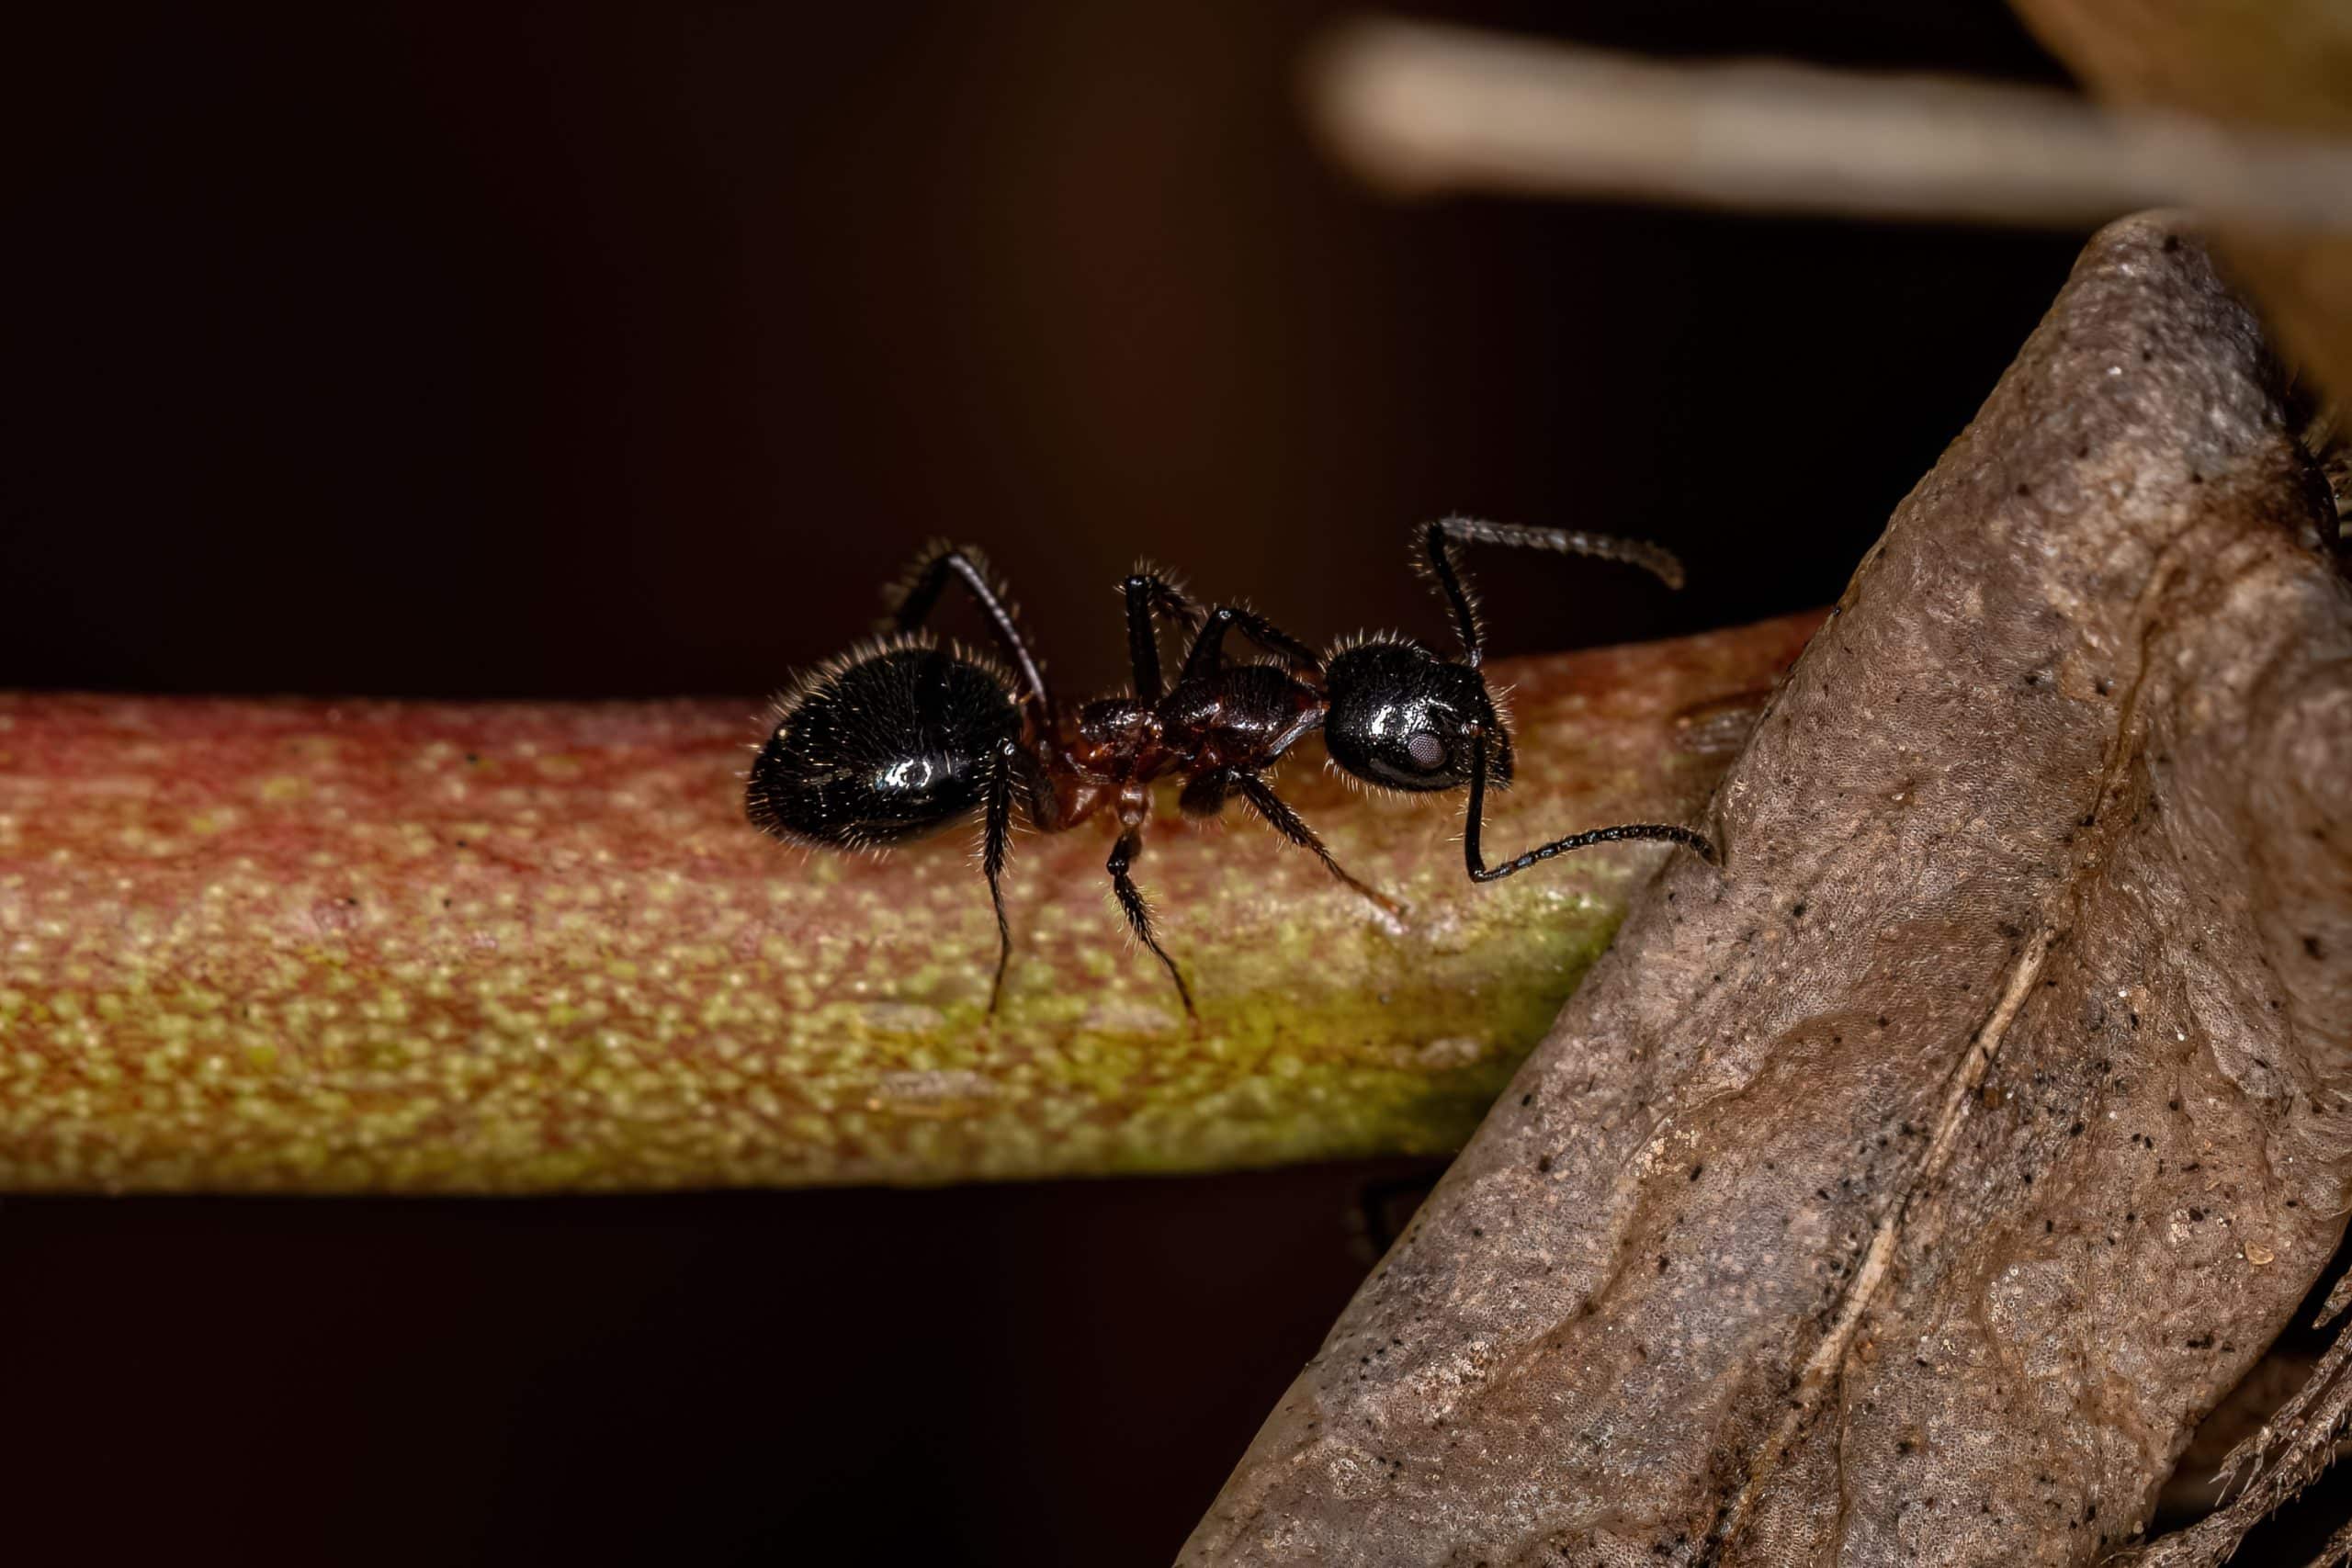 Ants in Arizona